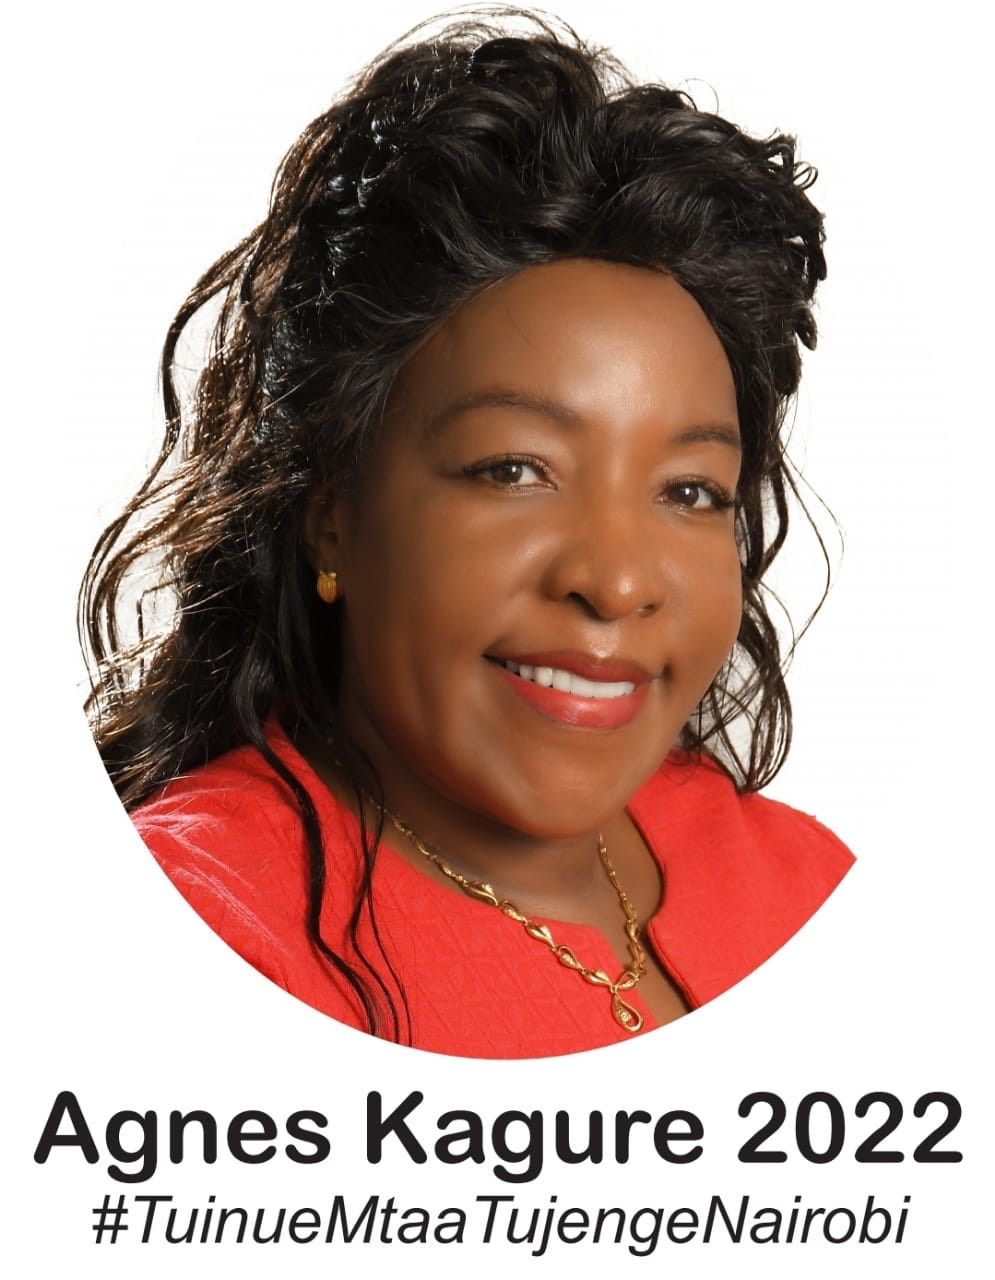 Agnes Kagure the most popular Nairobi governor aspirant – Tifa polls